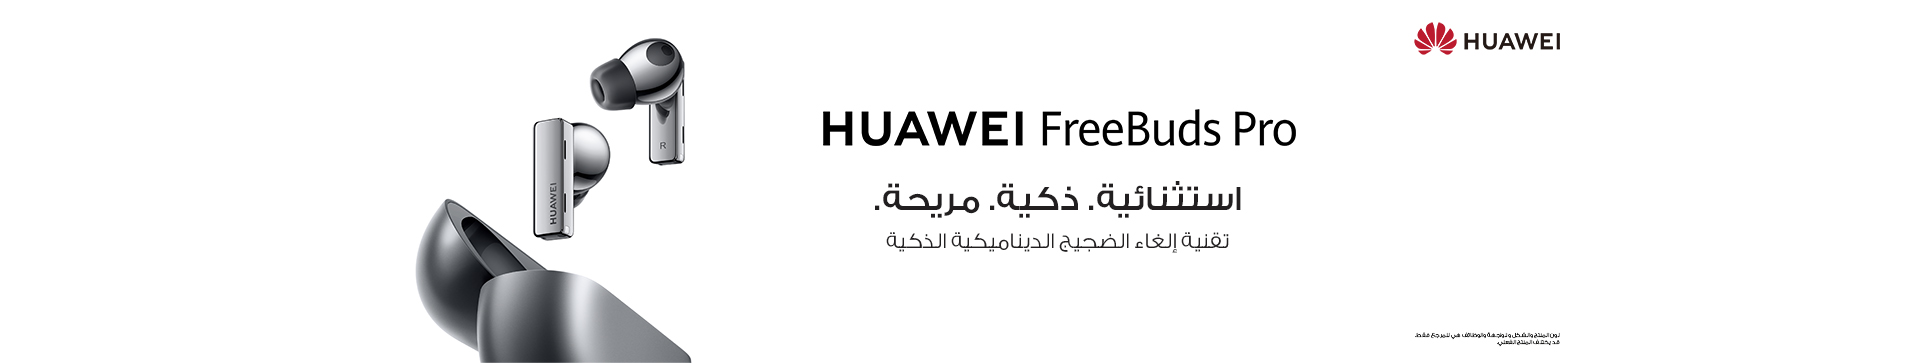 FreeBuds Pro_Web banner